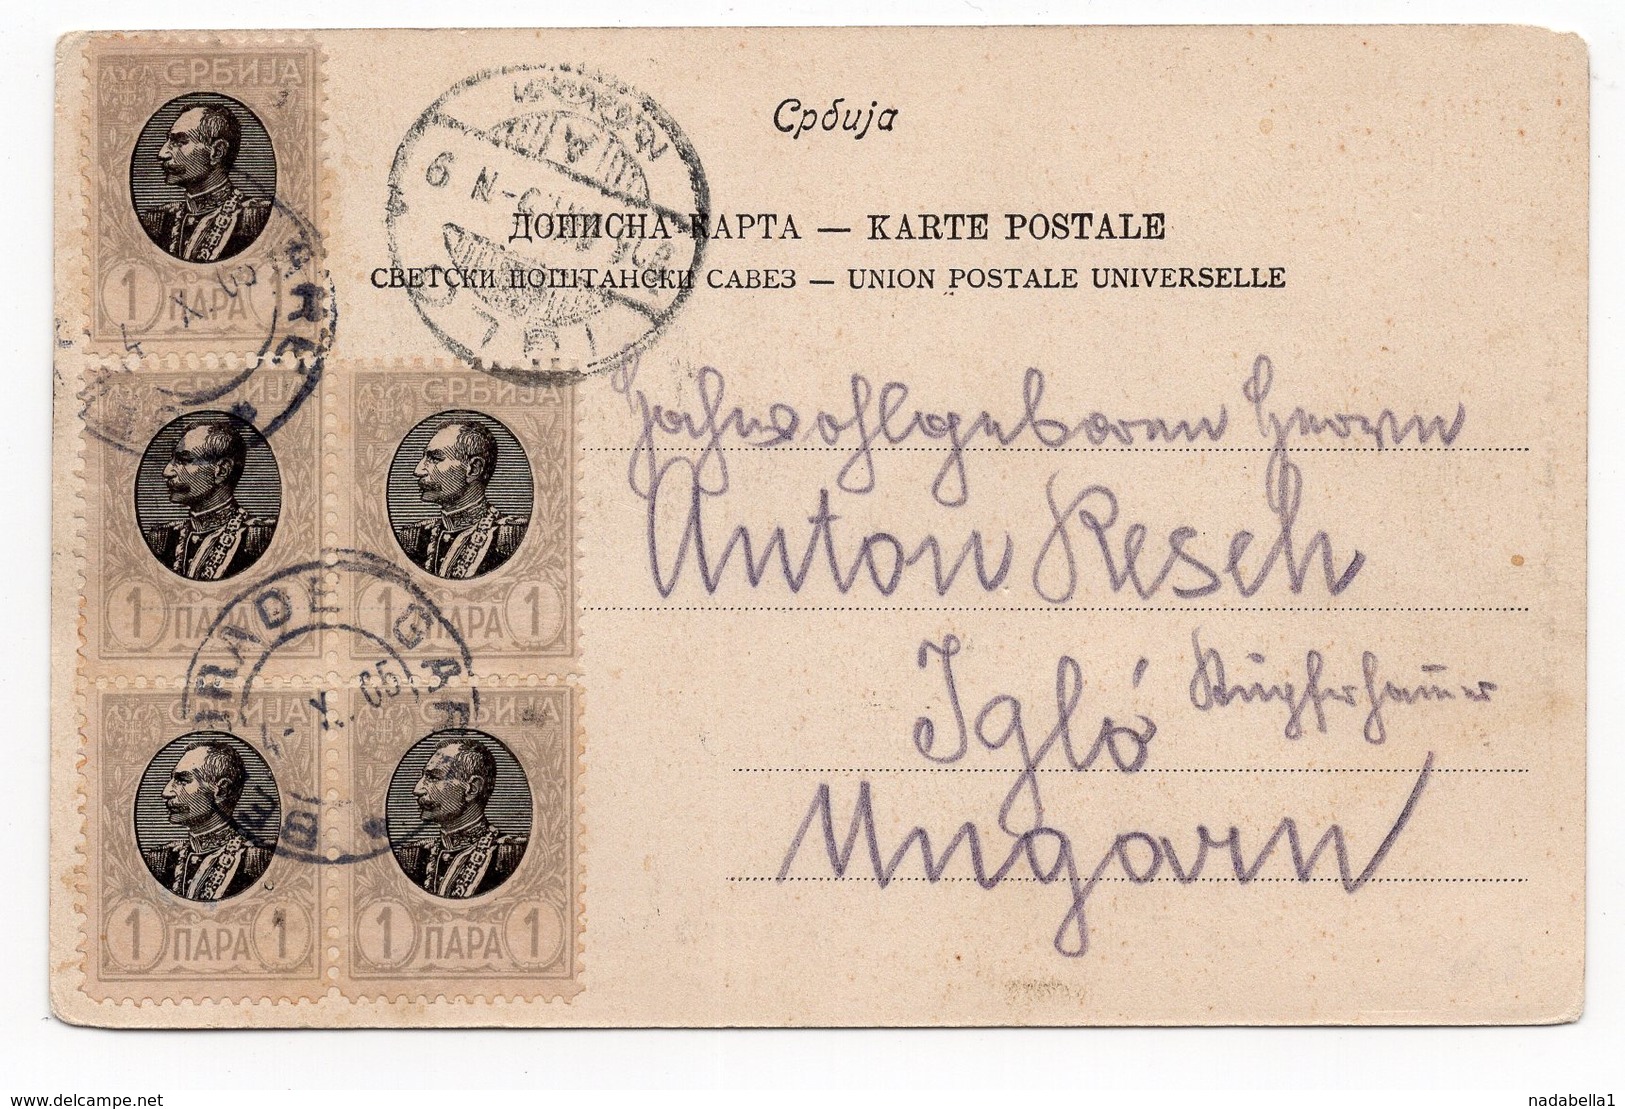 1905 SERBIA, BELGRADE, BELGRADE GARE TO HUNGARY, TOPCIDER PARK ENTRANCE,ILLUSTRATED POSTCARD, Used - Serbia